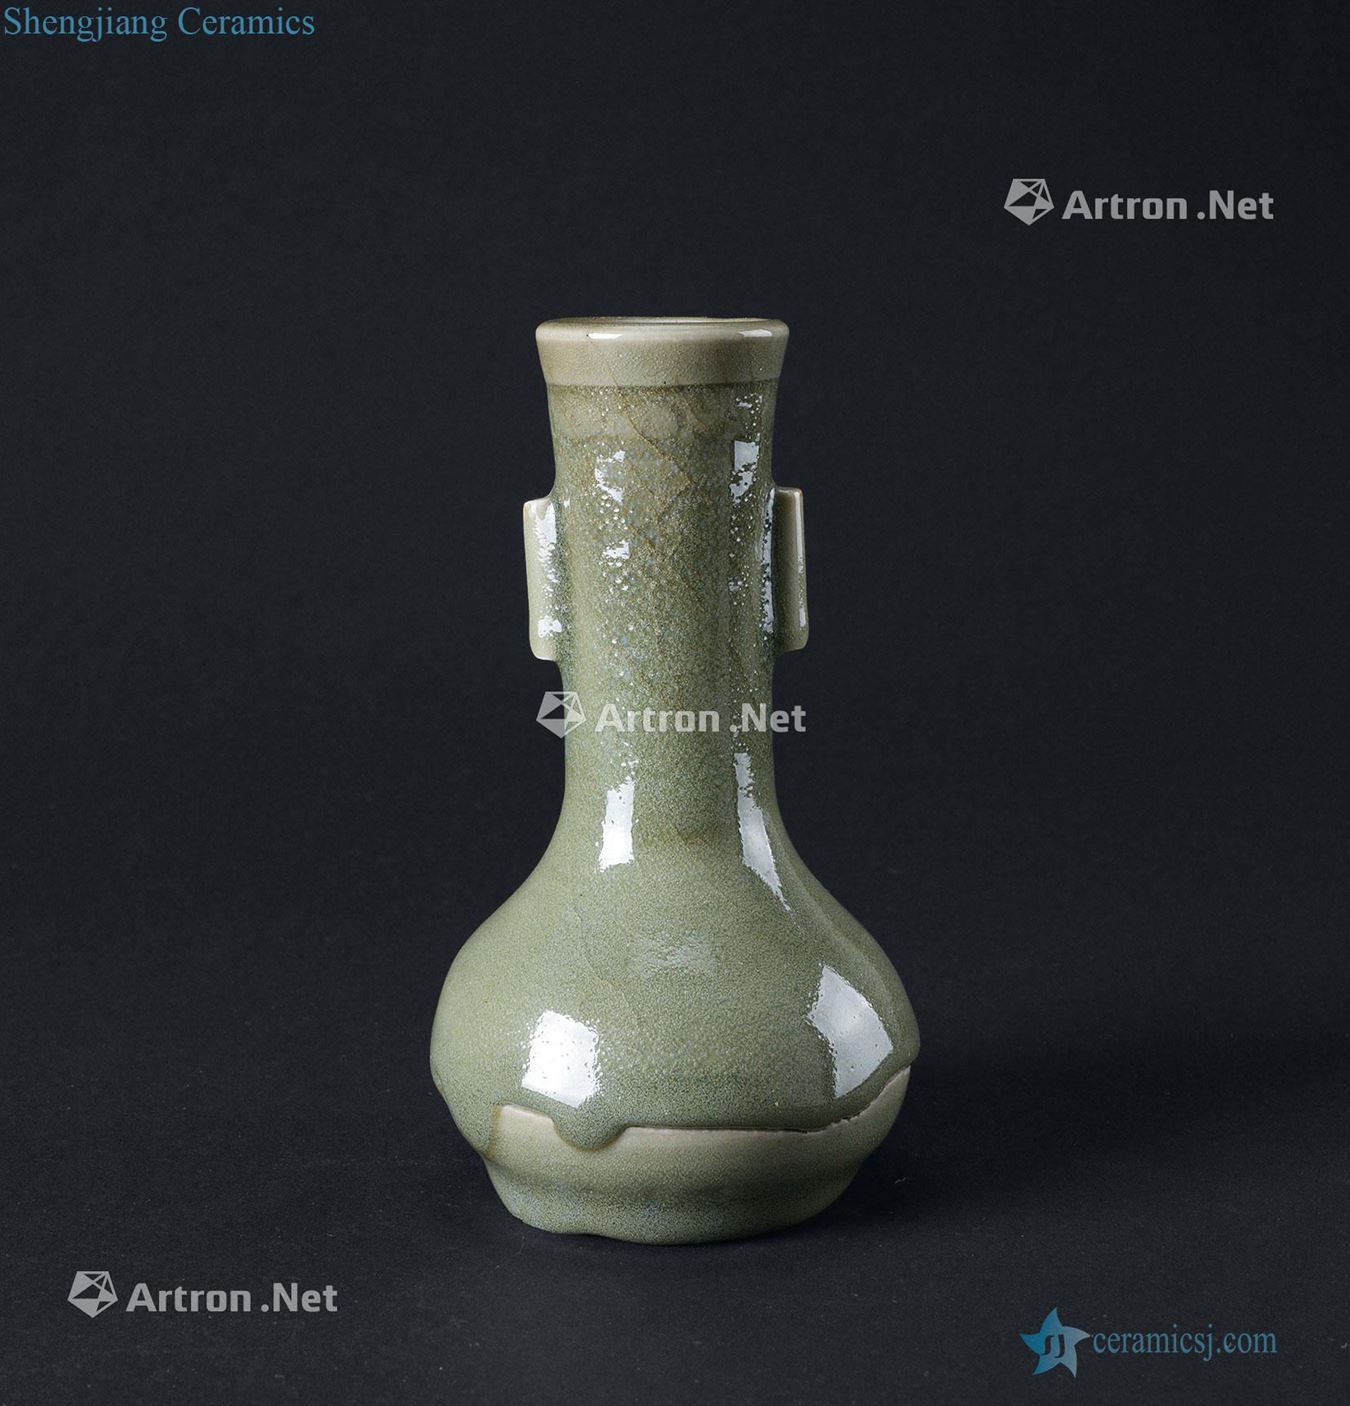 The yuan dynasty (1279-1368), longquan celadon ears the flask